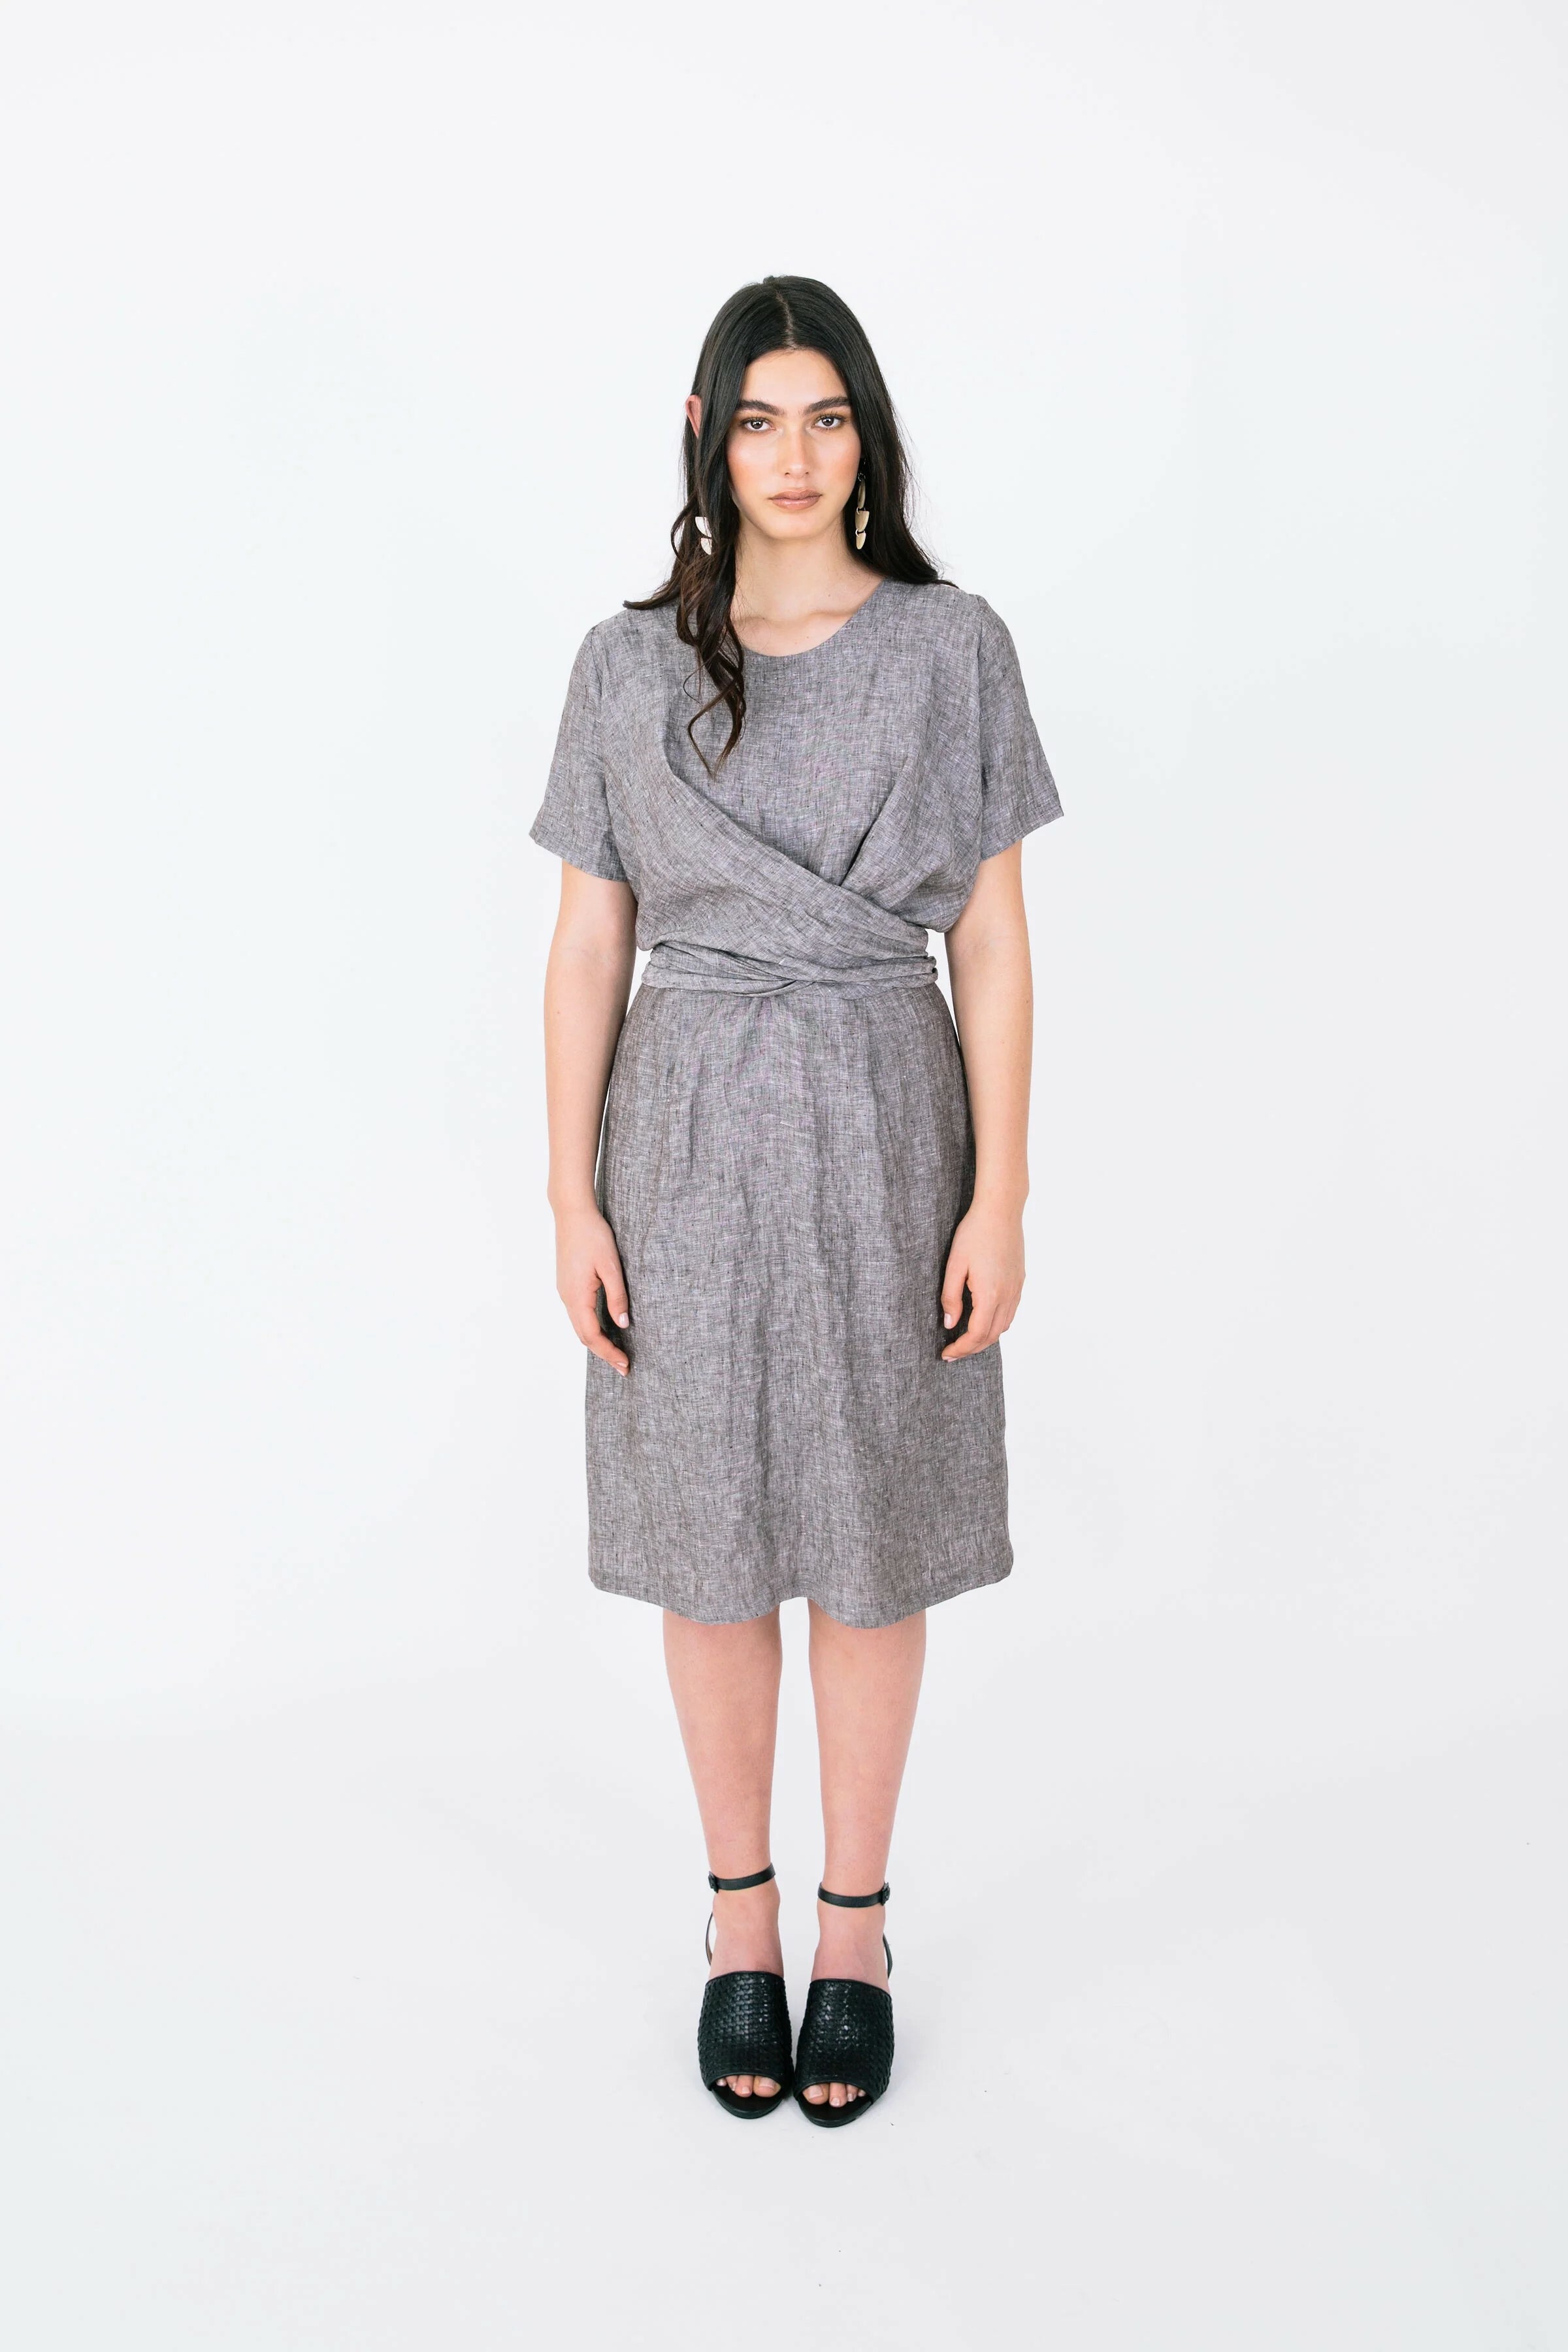 Buy Papercut Patterns Meridian Dress Sewing Pattern